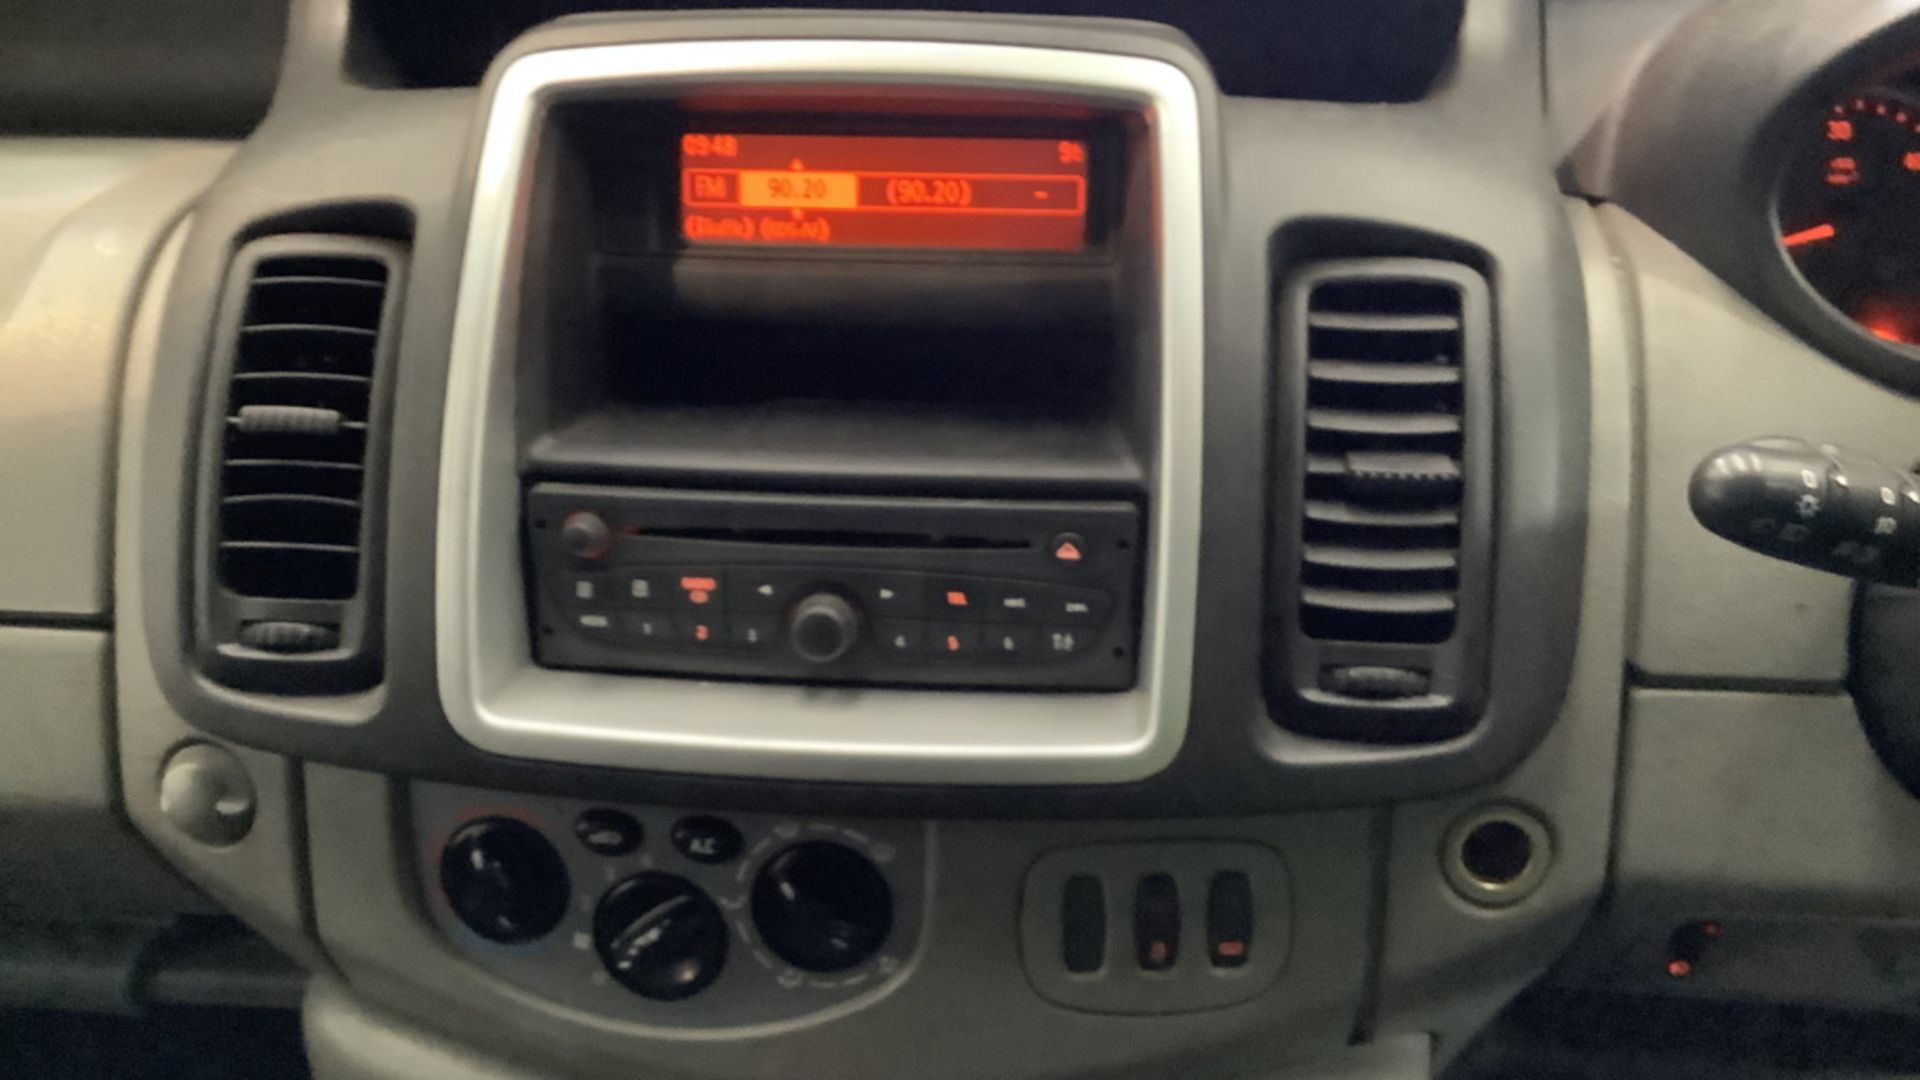 Vauxhall Vivaro 2.0 CDTI 115 2700 Sportive L1 H1 2014 '14 Reg' - A/C - Panel Van - Image 7 of 8